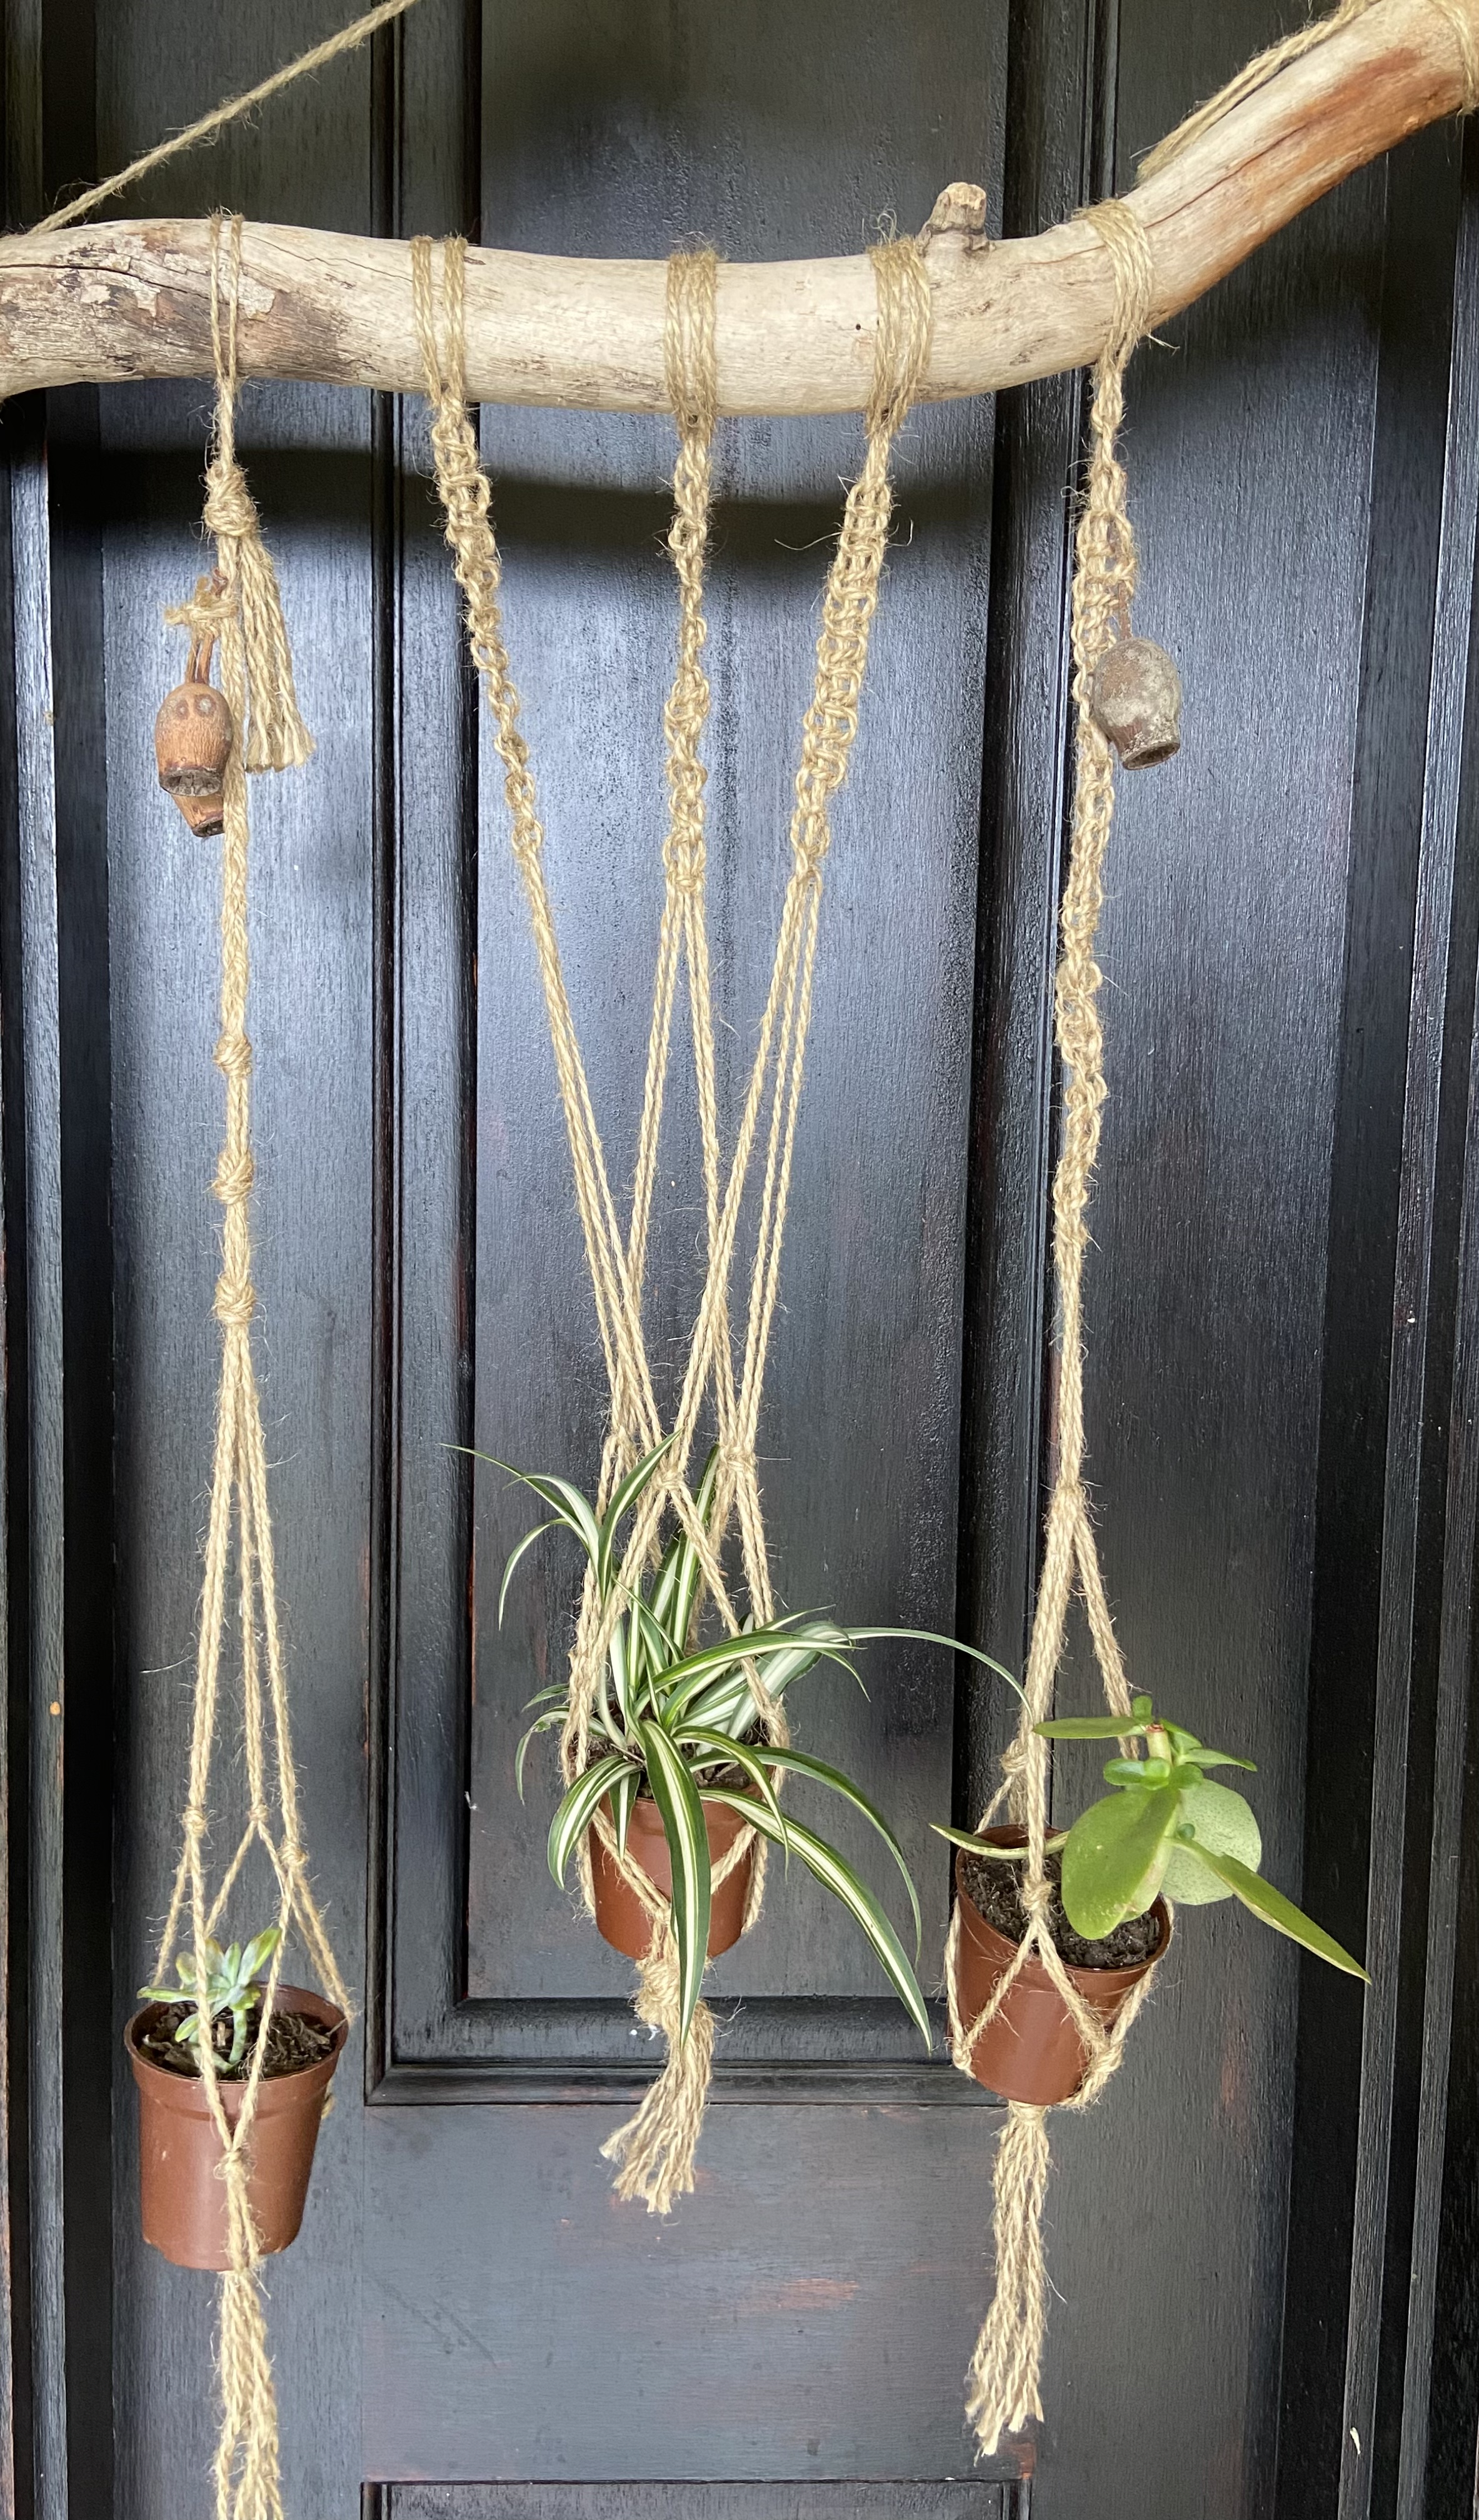 Hanging planters